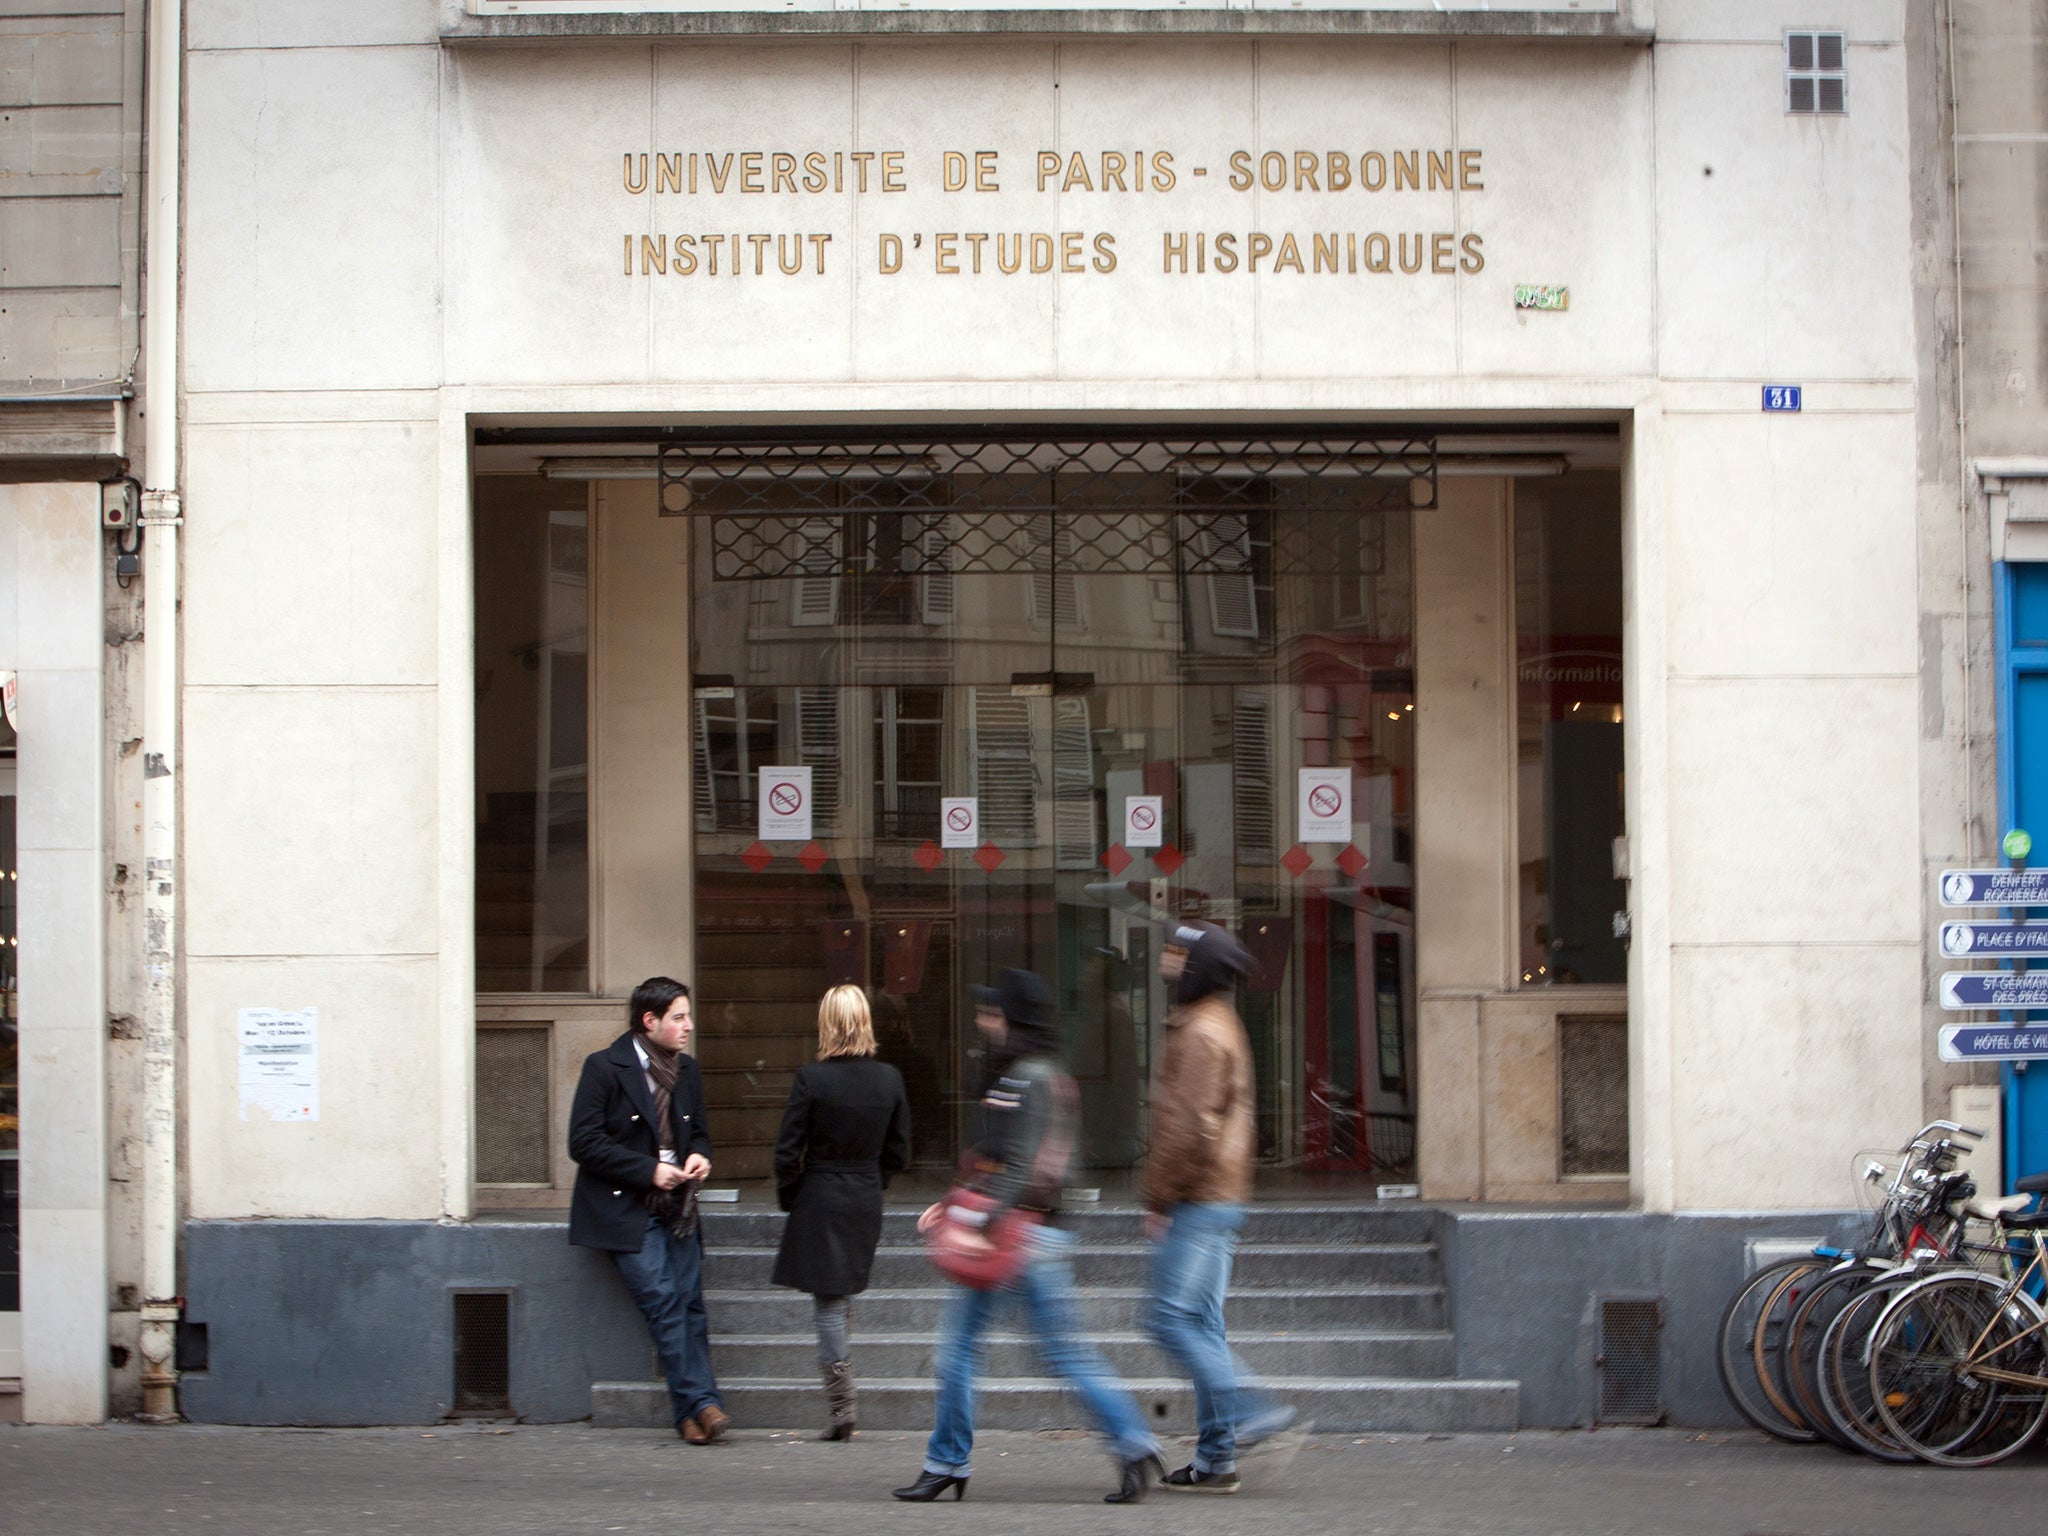 The Spanish studies institute of the Sorbonne university in Paris